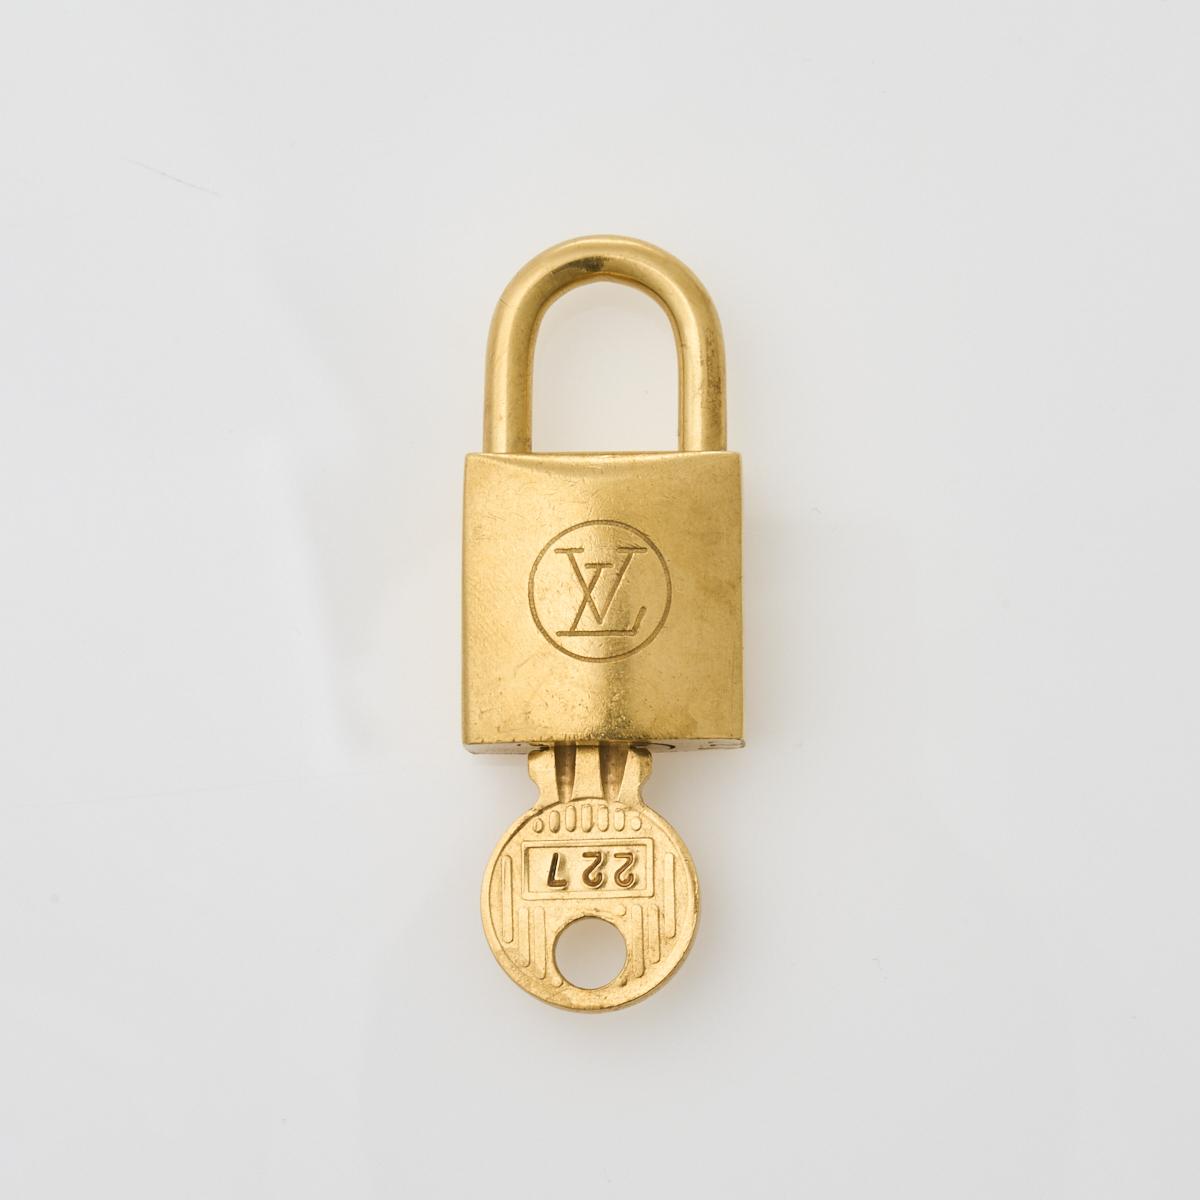 Sold at Auction: Louis Vuitton, LOUIS VUITTON PadLock Lock Key